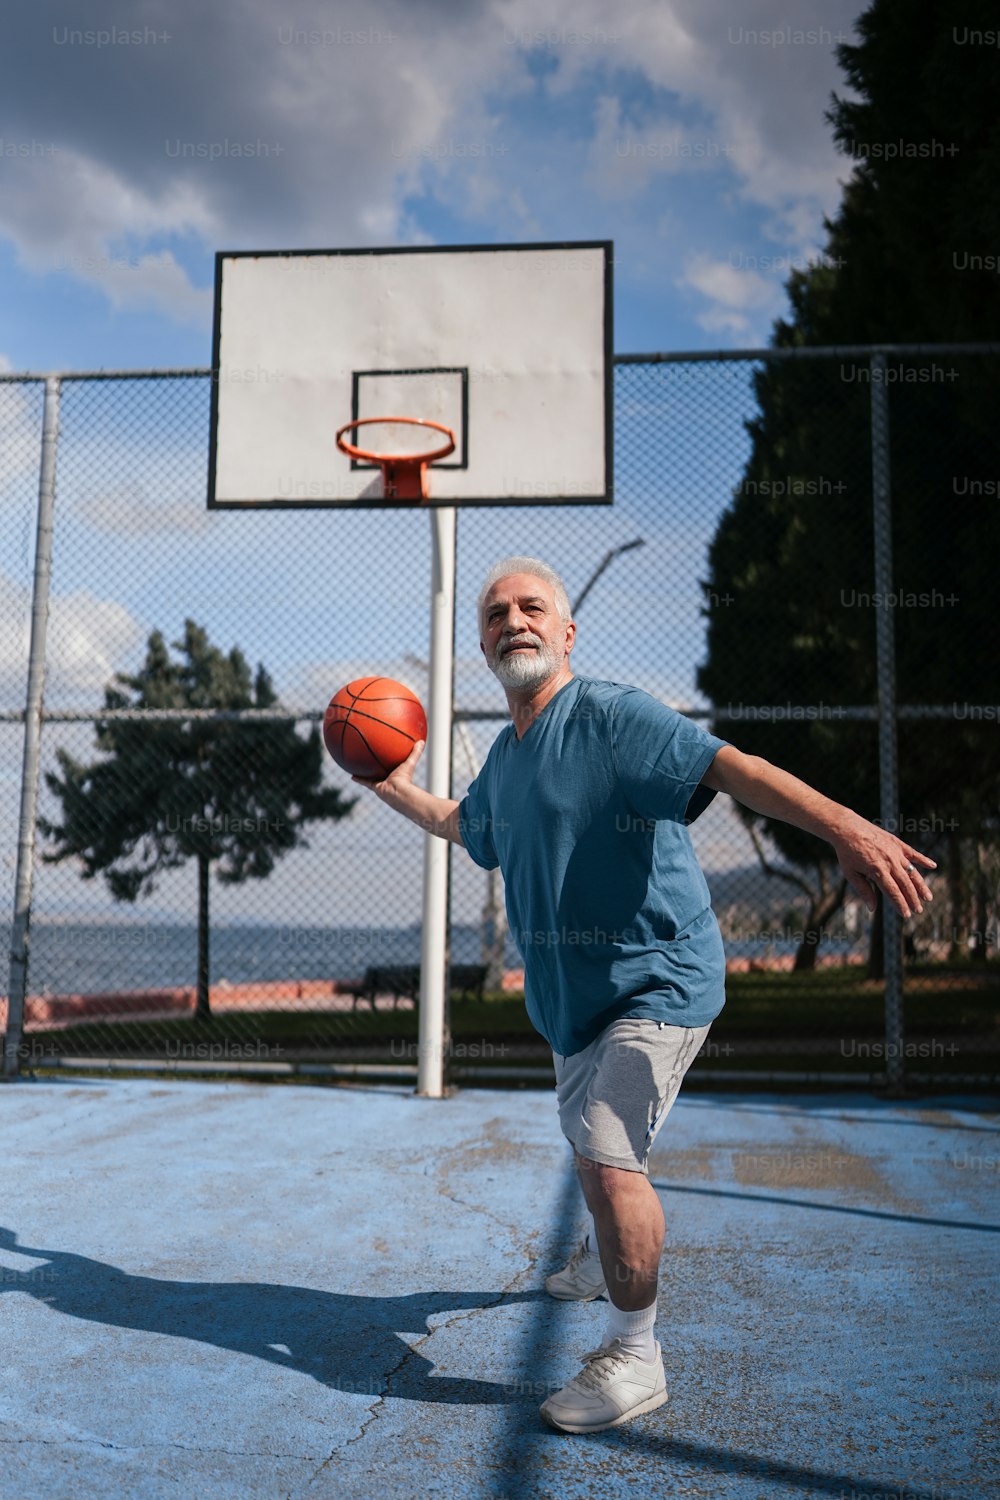 a man holding a basketball on a basketball court